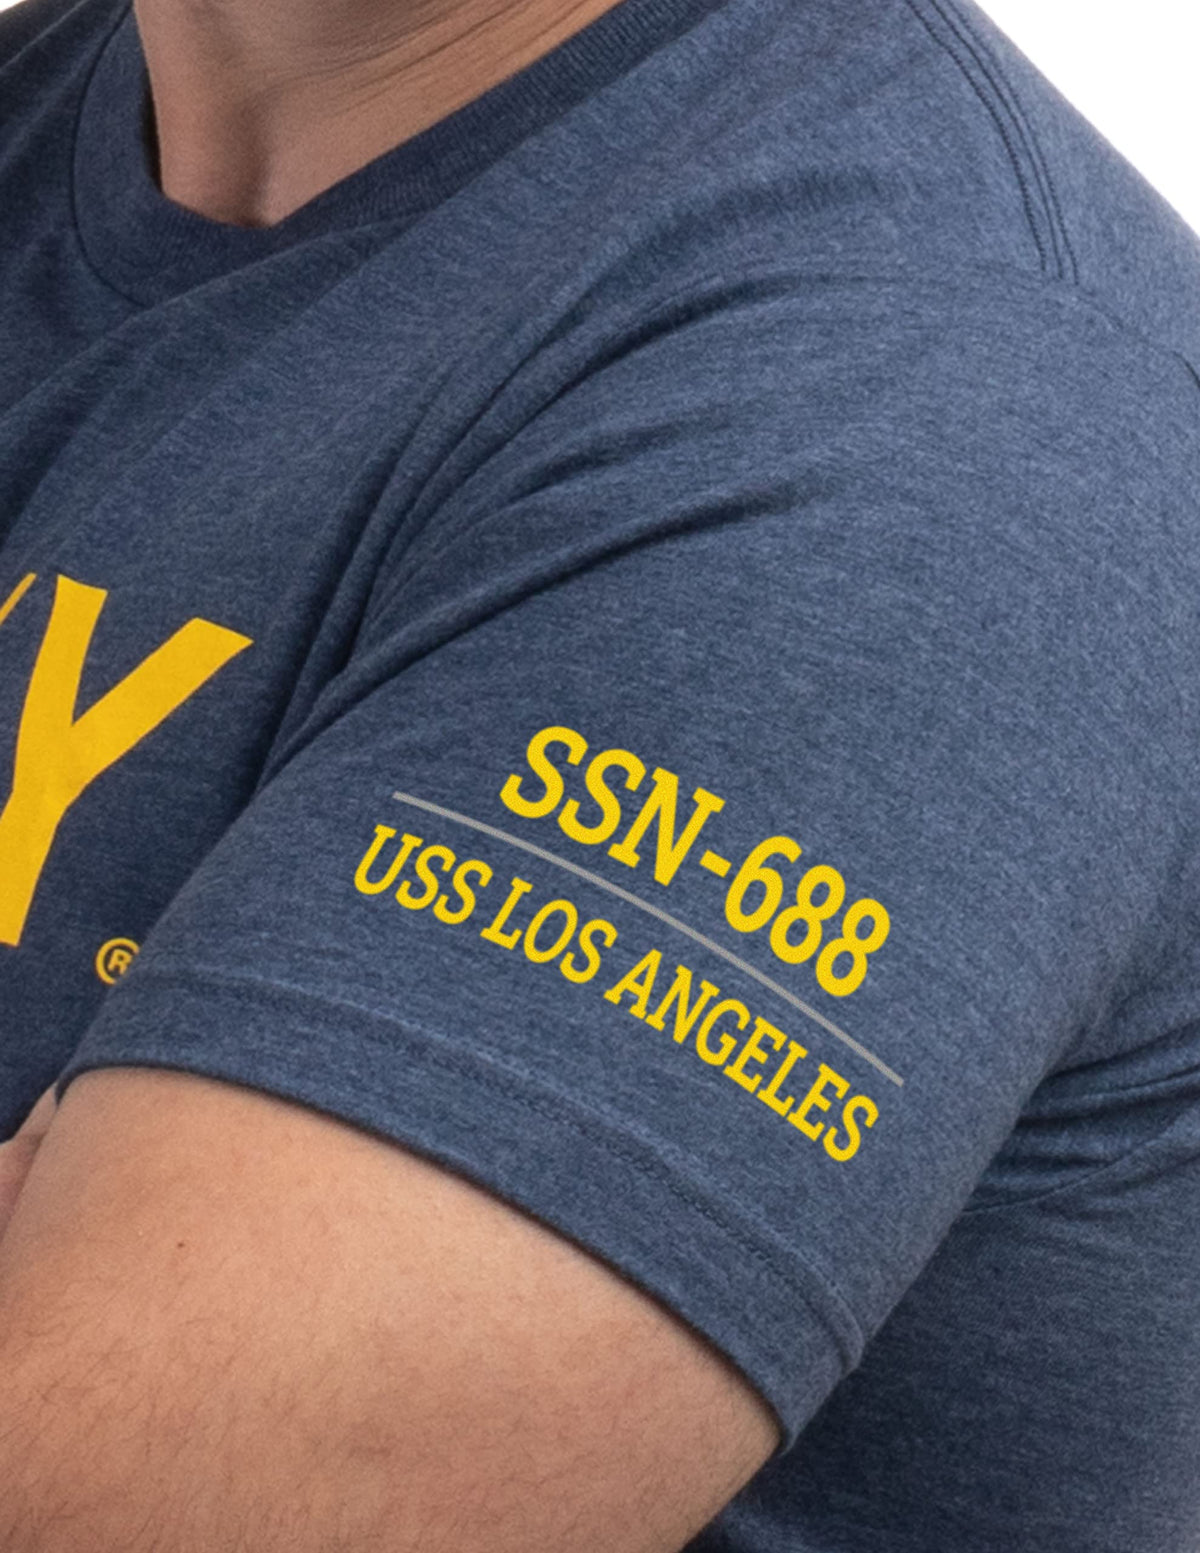 USS Los Angeles, SSN-688 | U.S. Navy Sailor Veteran USN United States Naval T-shirt for Men Women